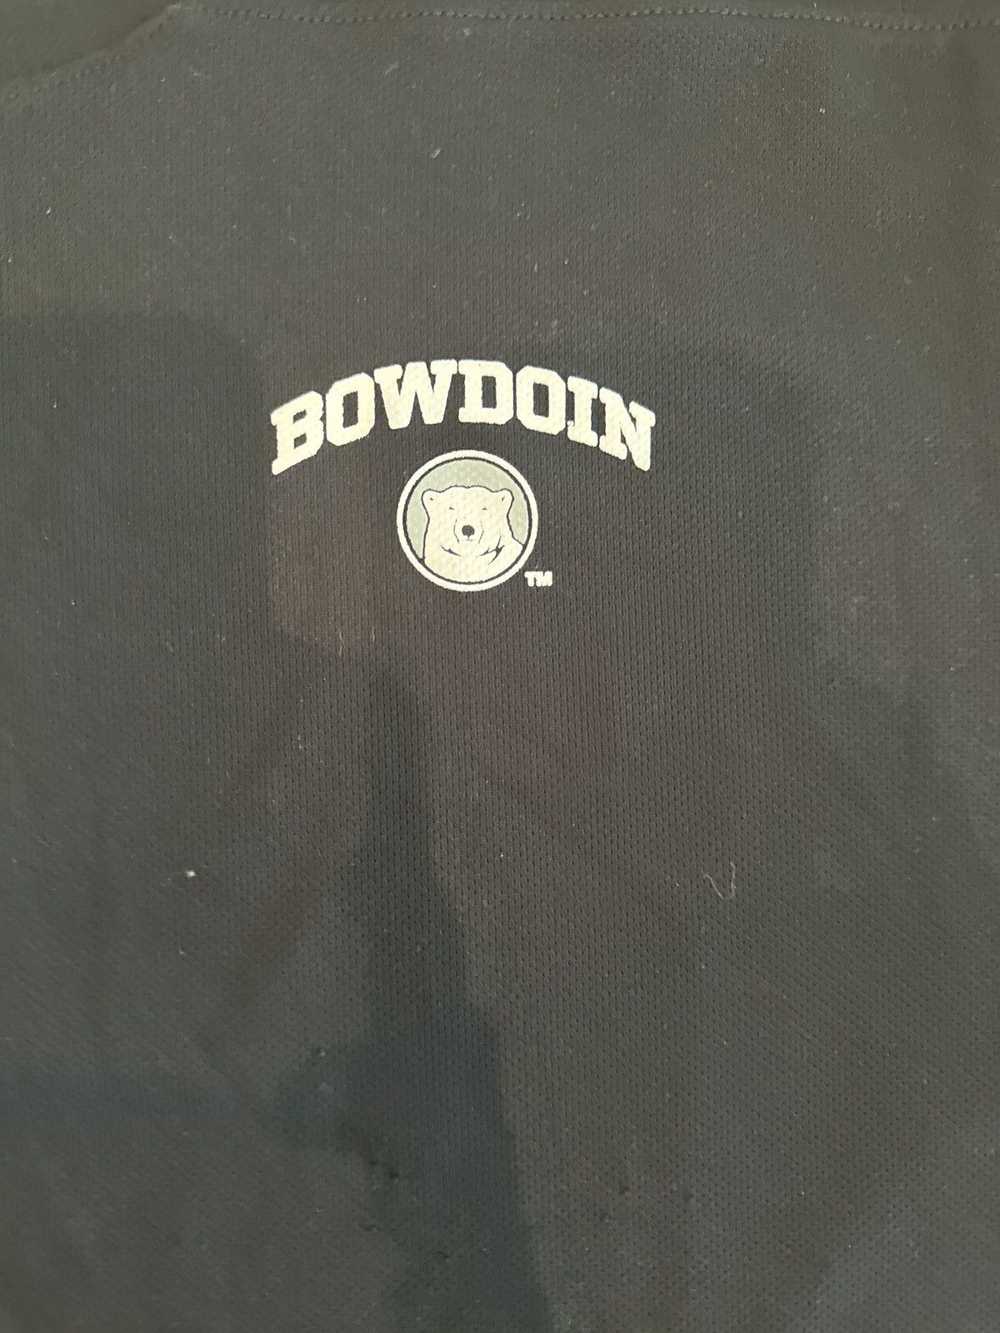 Nike Bowdoin College Athletic T-Shirt - image 3